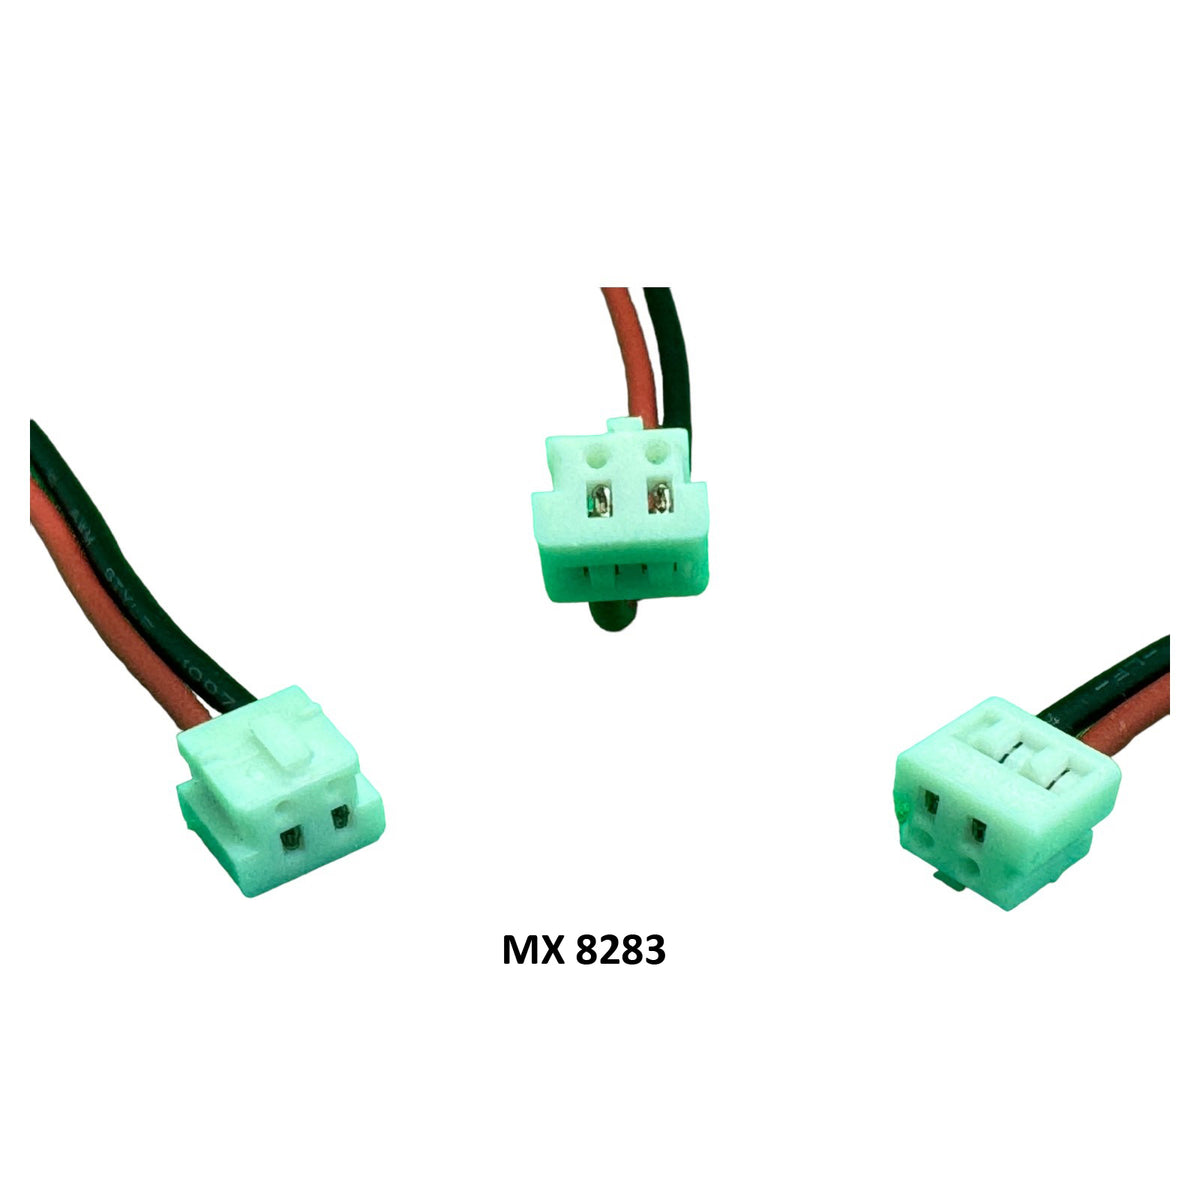 1S 3.7V 3400mAh Li-ion battery with Molex 8283 2pin connector